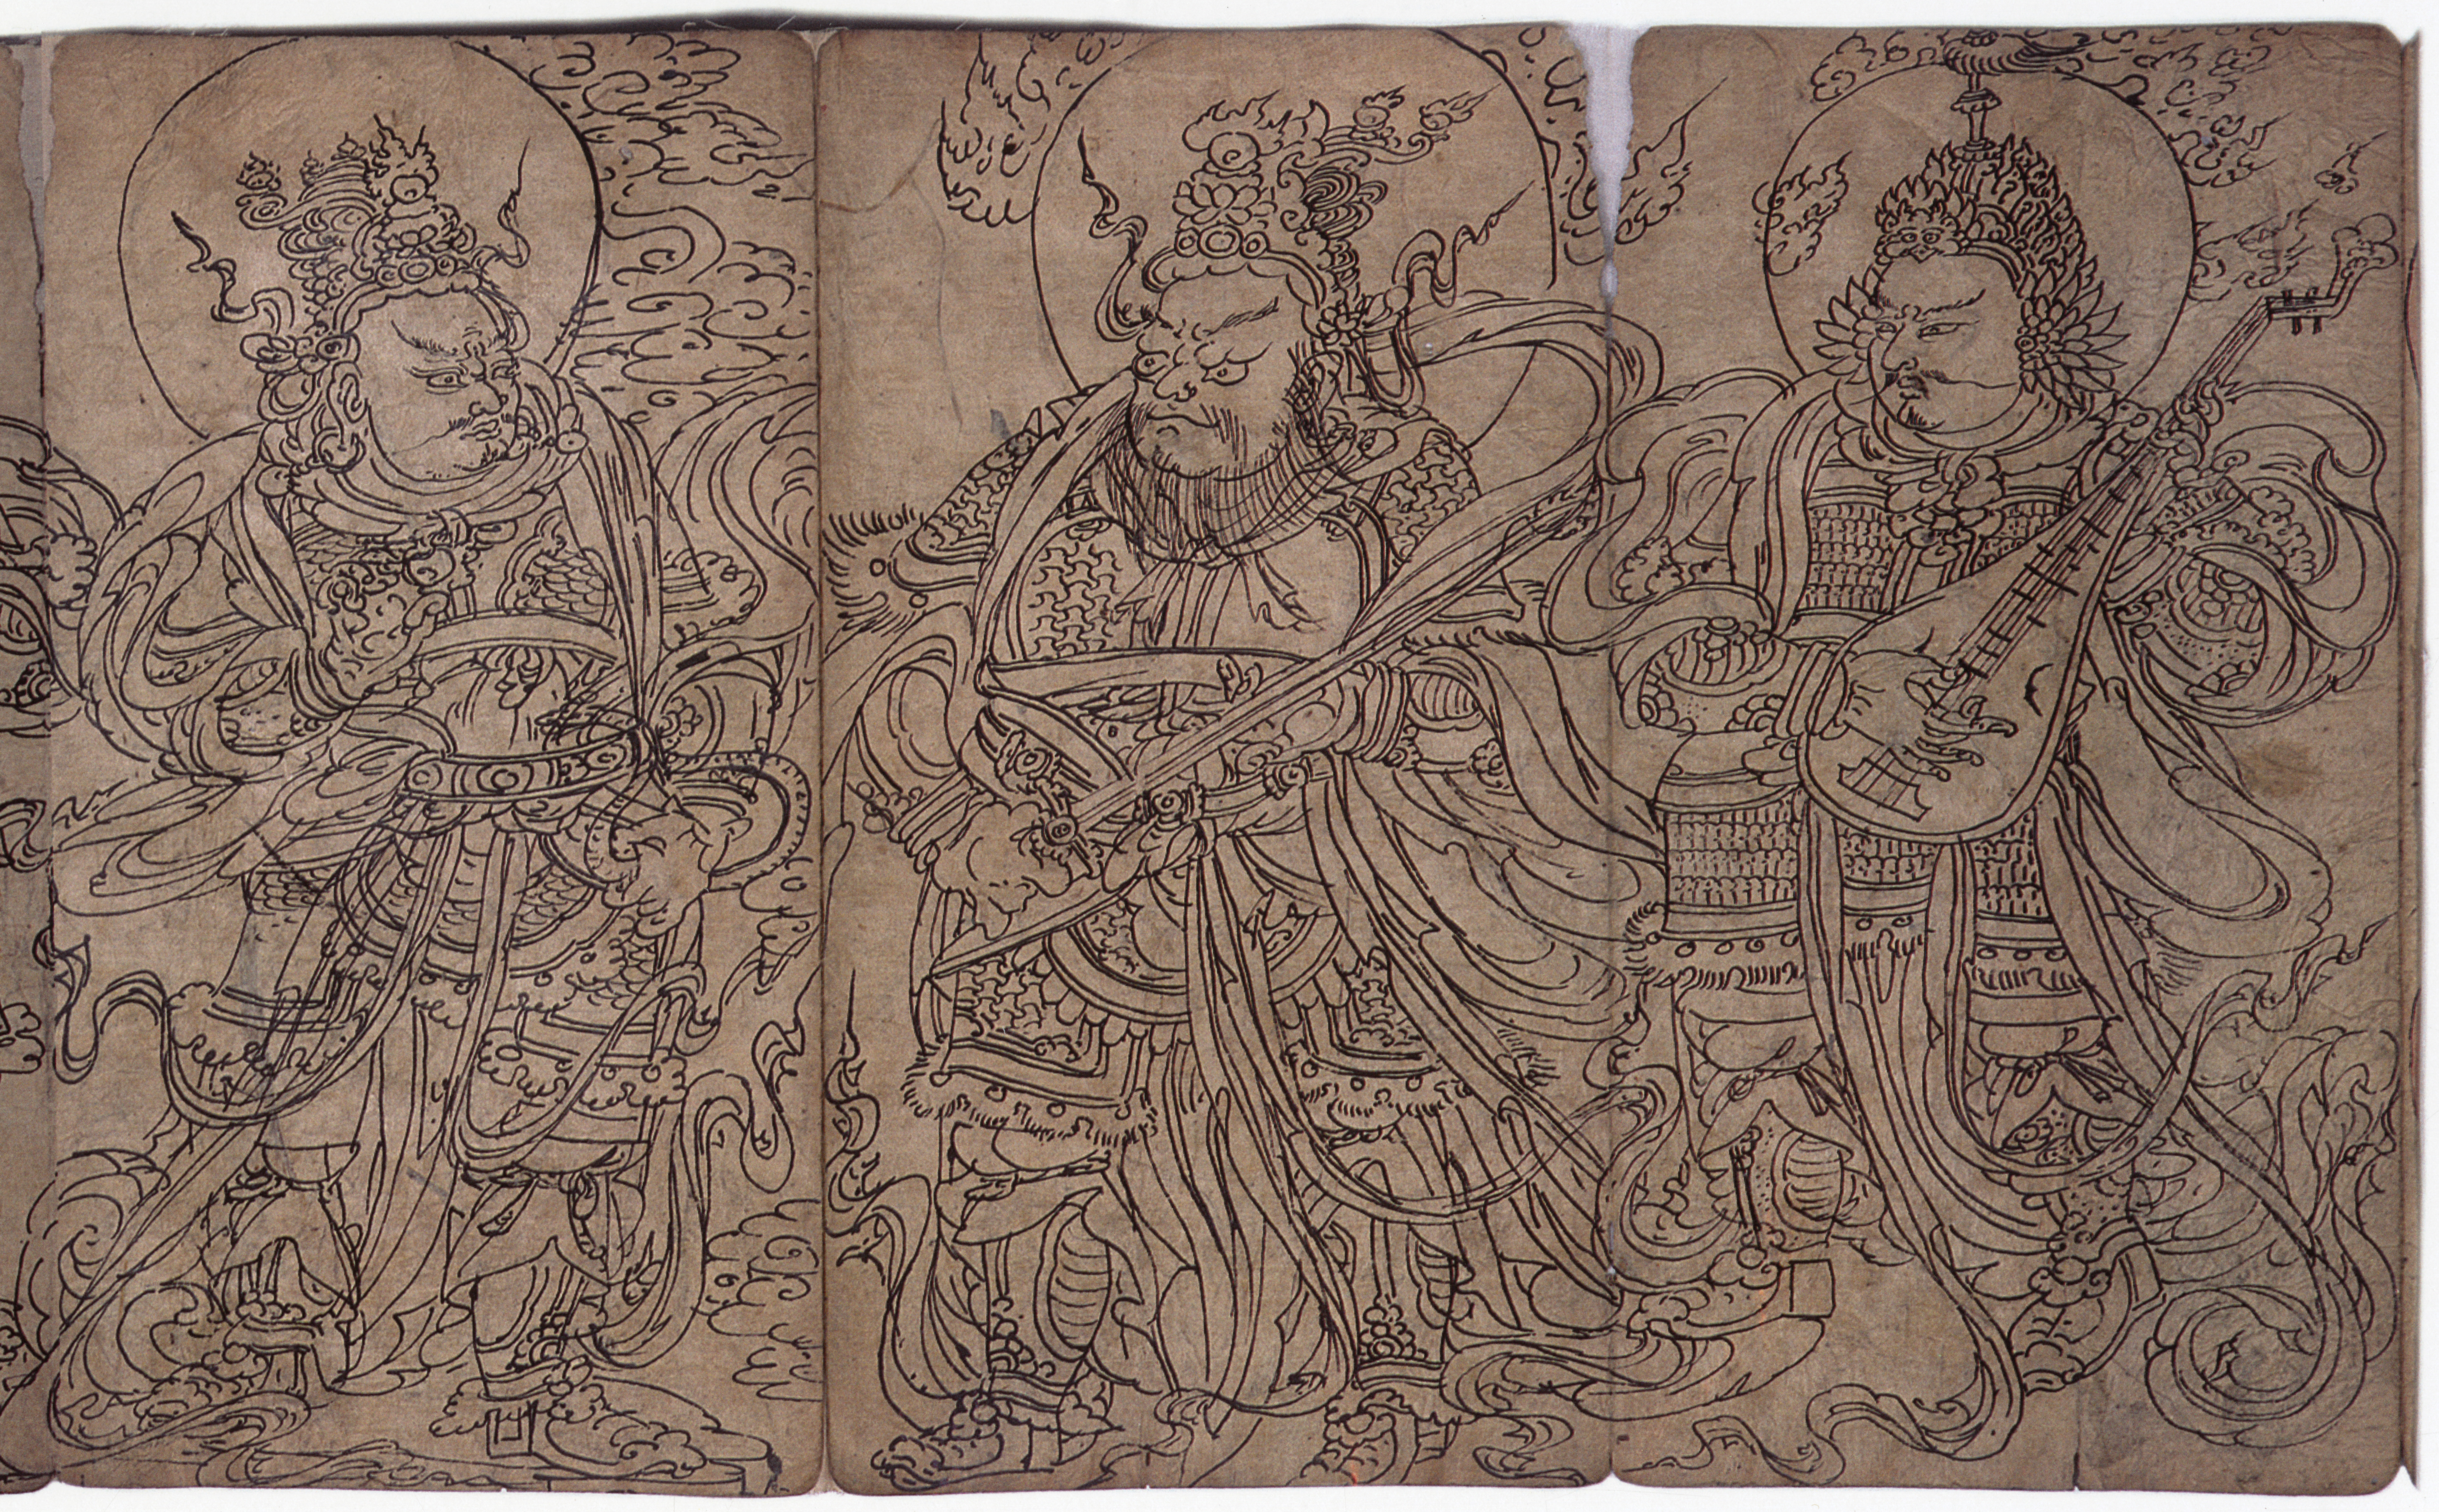 Line drawing on three panels of paper depicting three deities wearing extravagantly unfurling garments